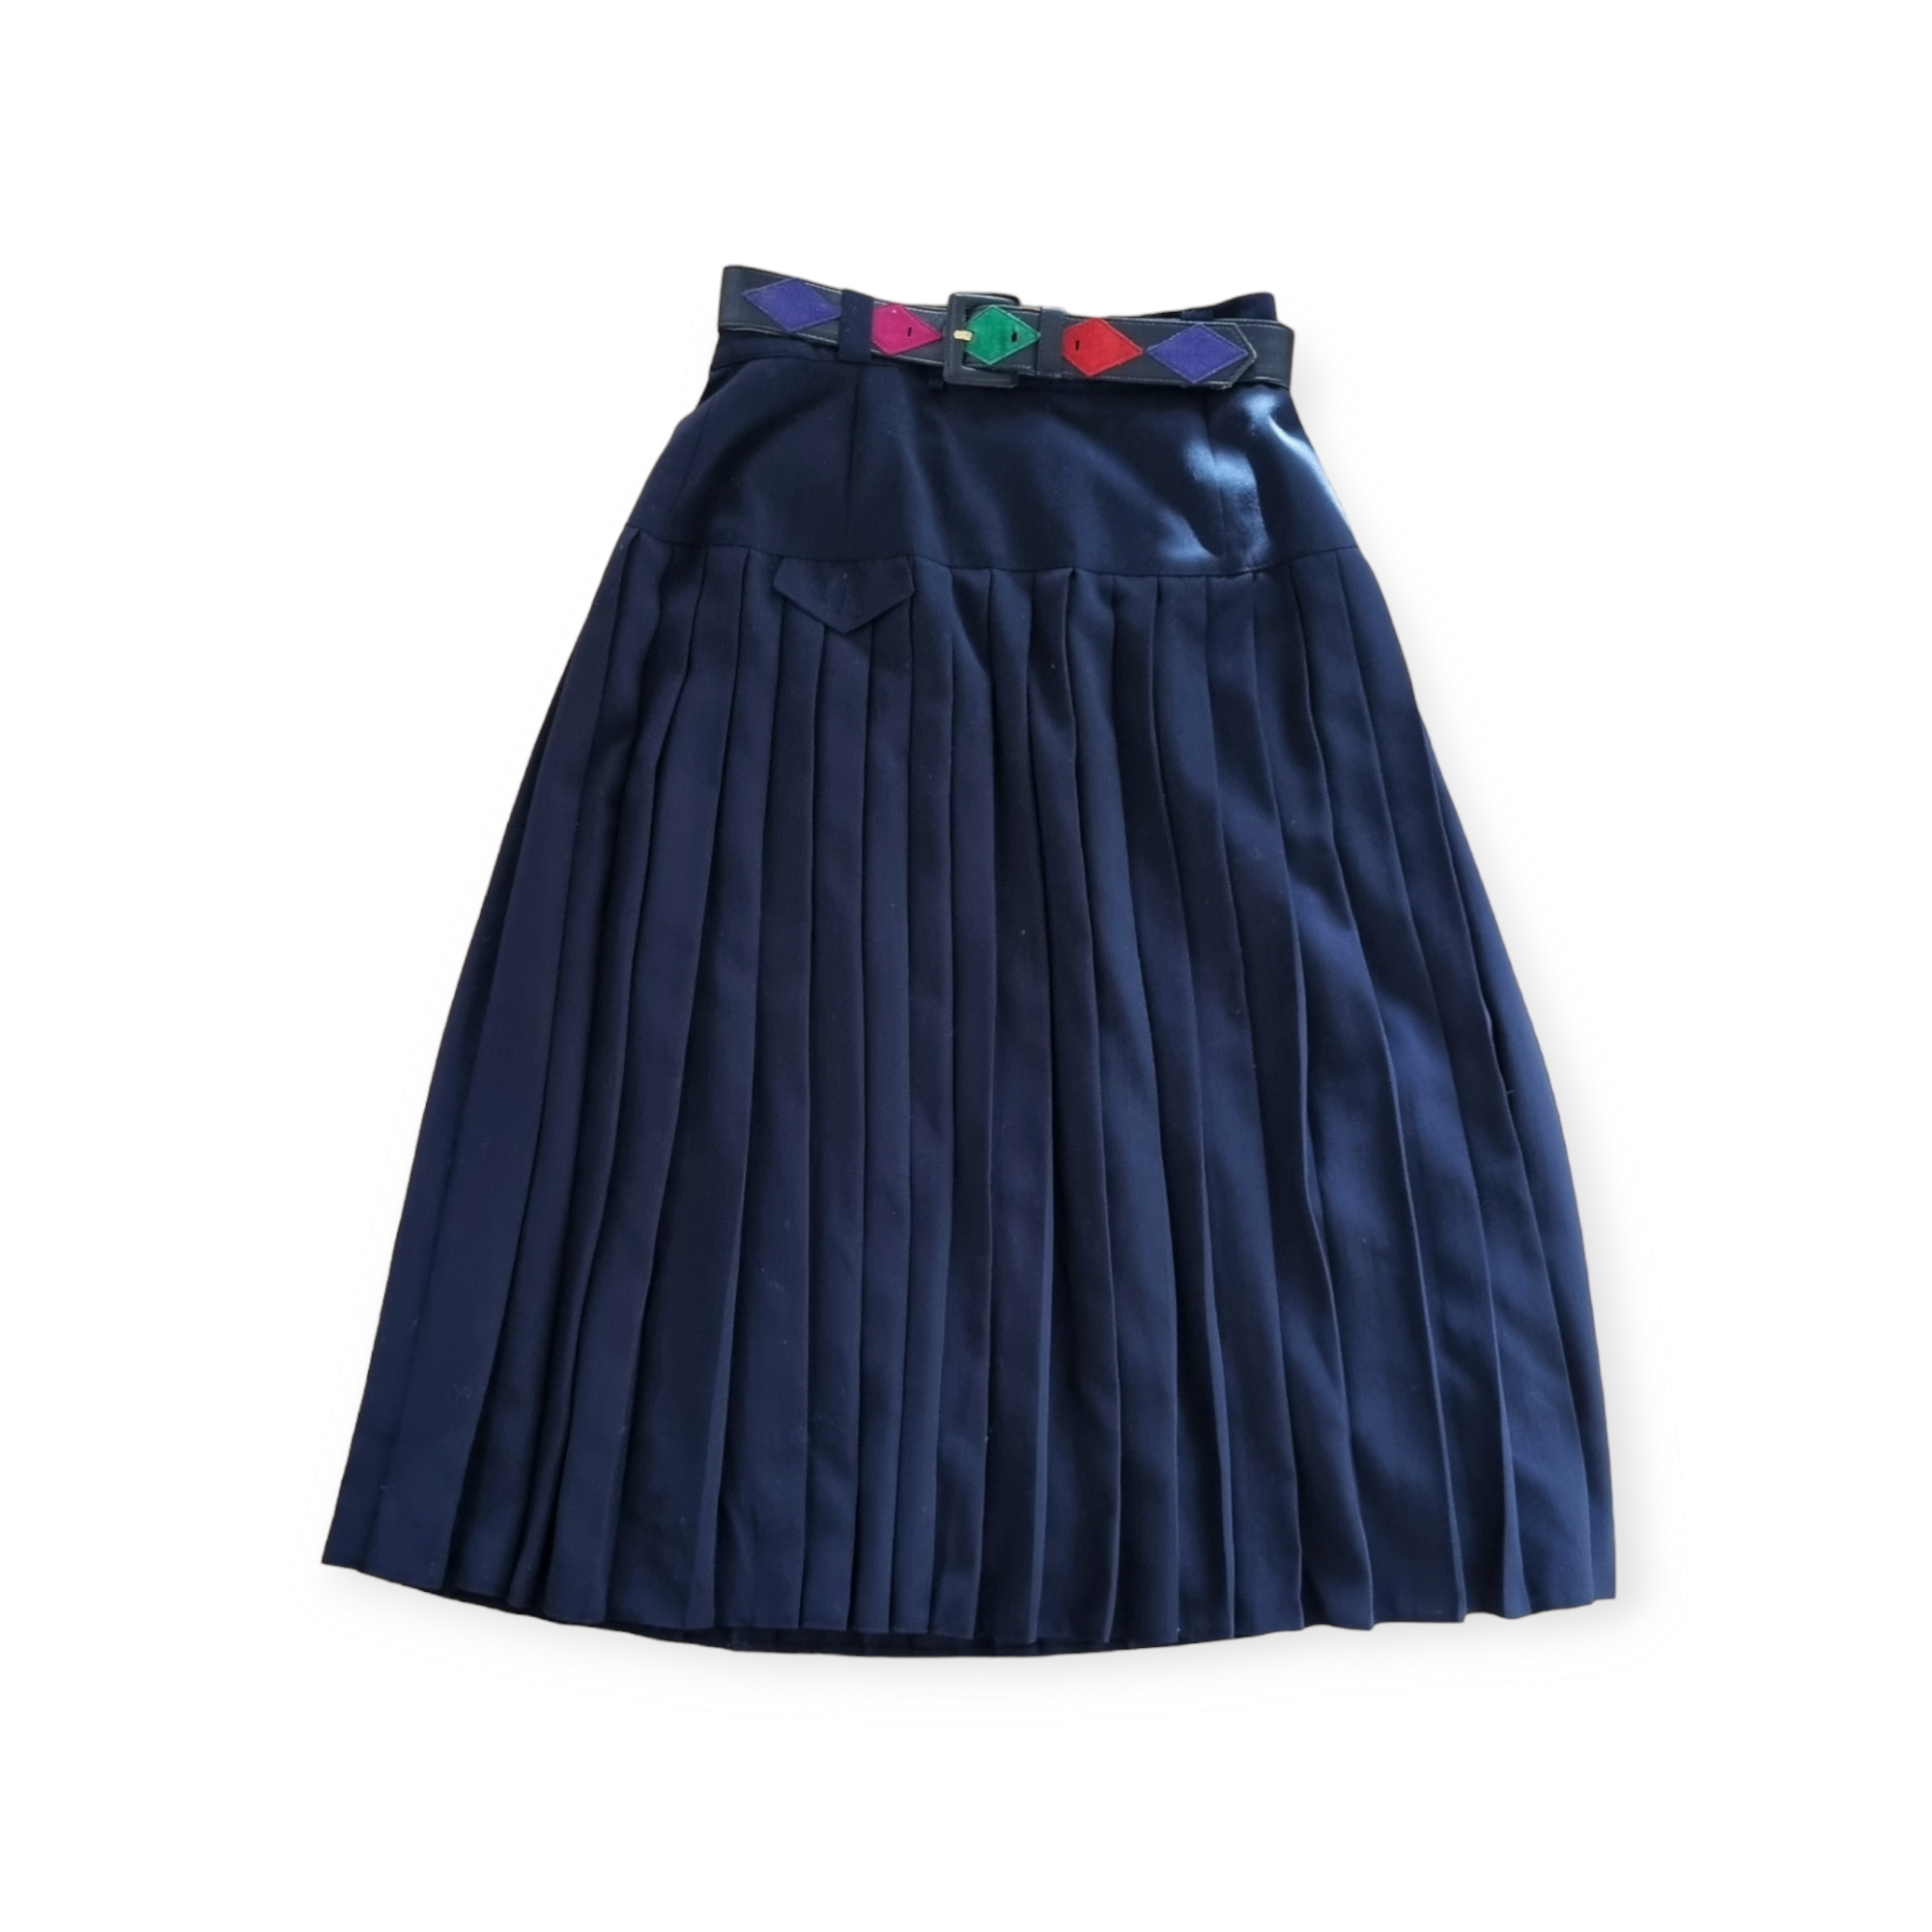 Yarell vintage skirt